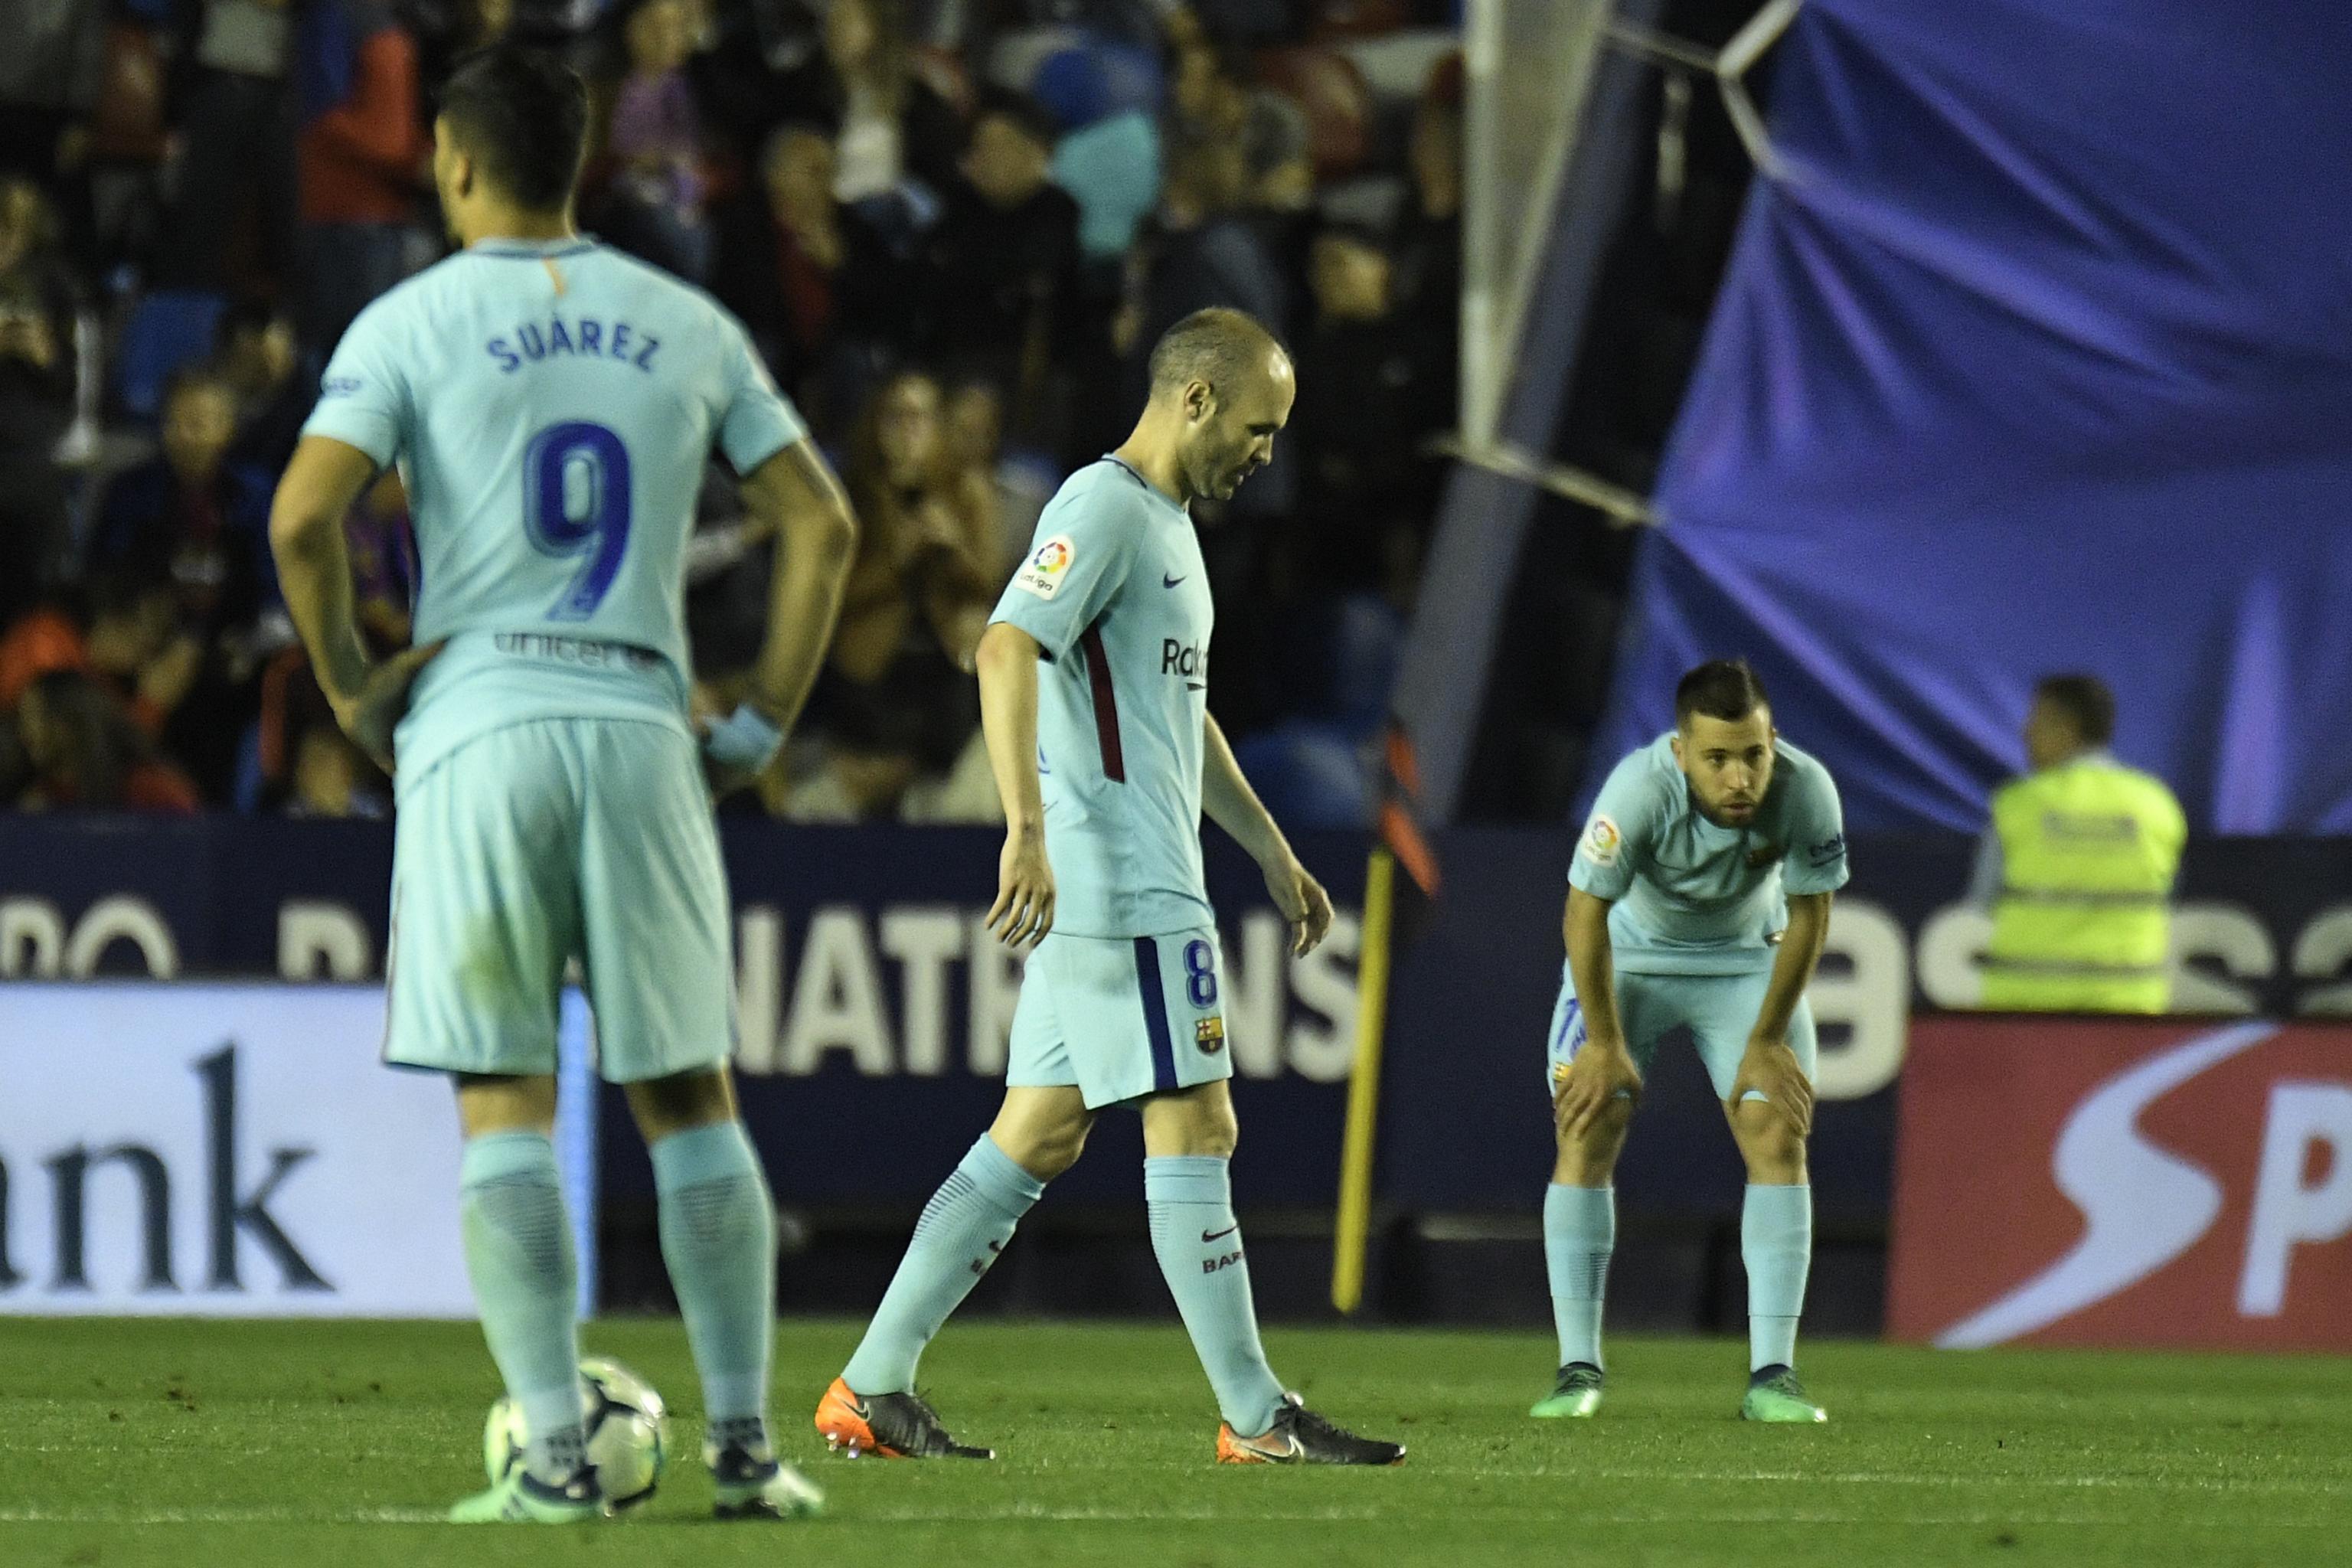 Half-time in LaLiga advantage Barça - by Ben Hayward